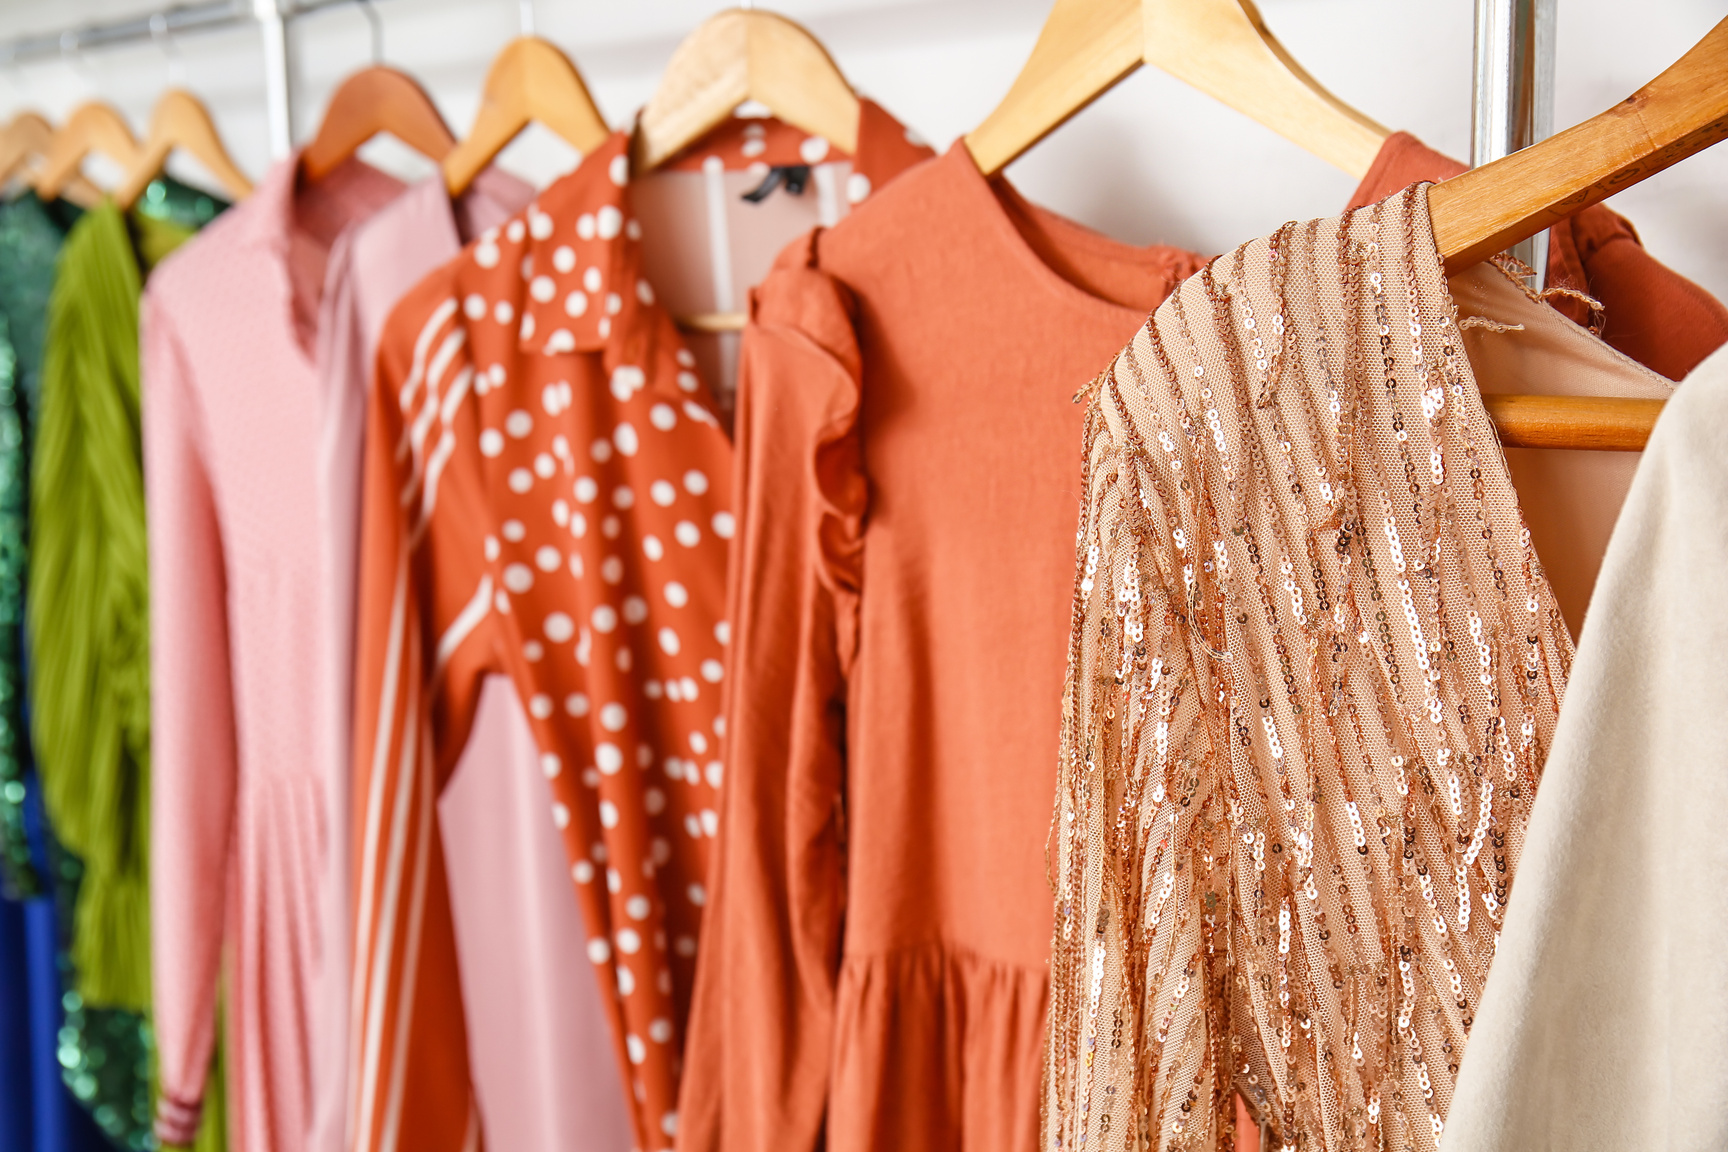 Hangers with Stylish Dresses, Closeup